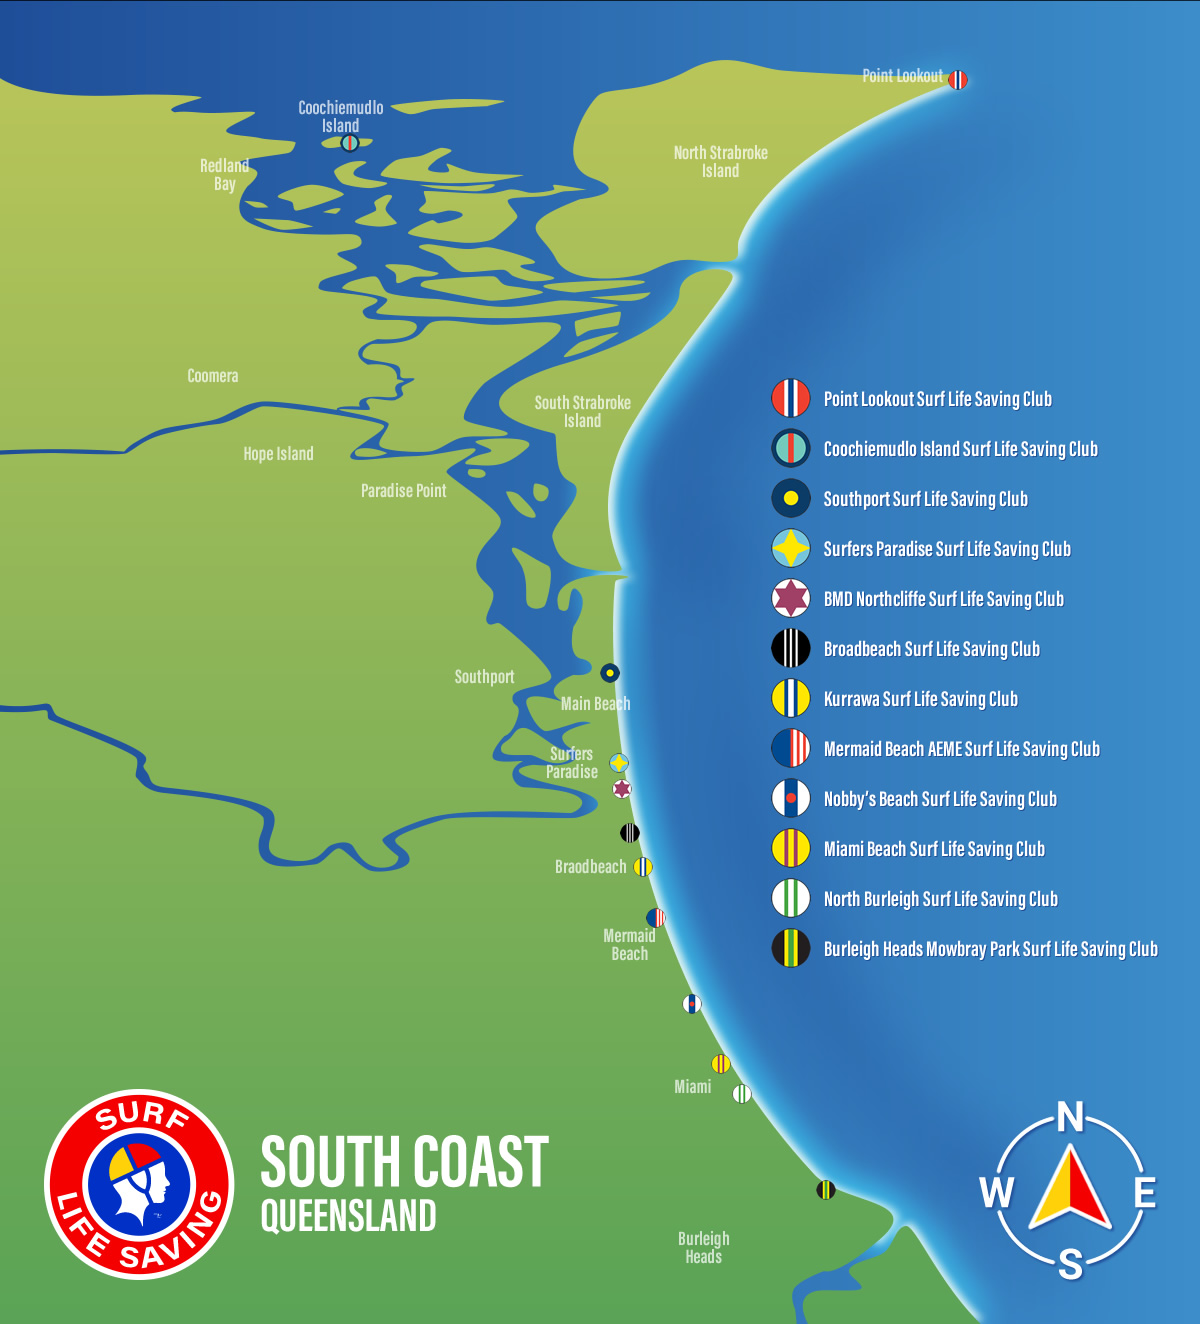 SLSQ South Coast Locations